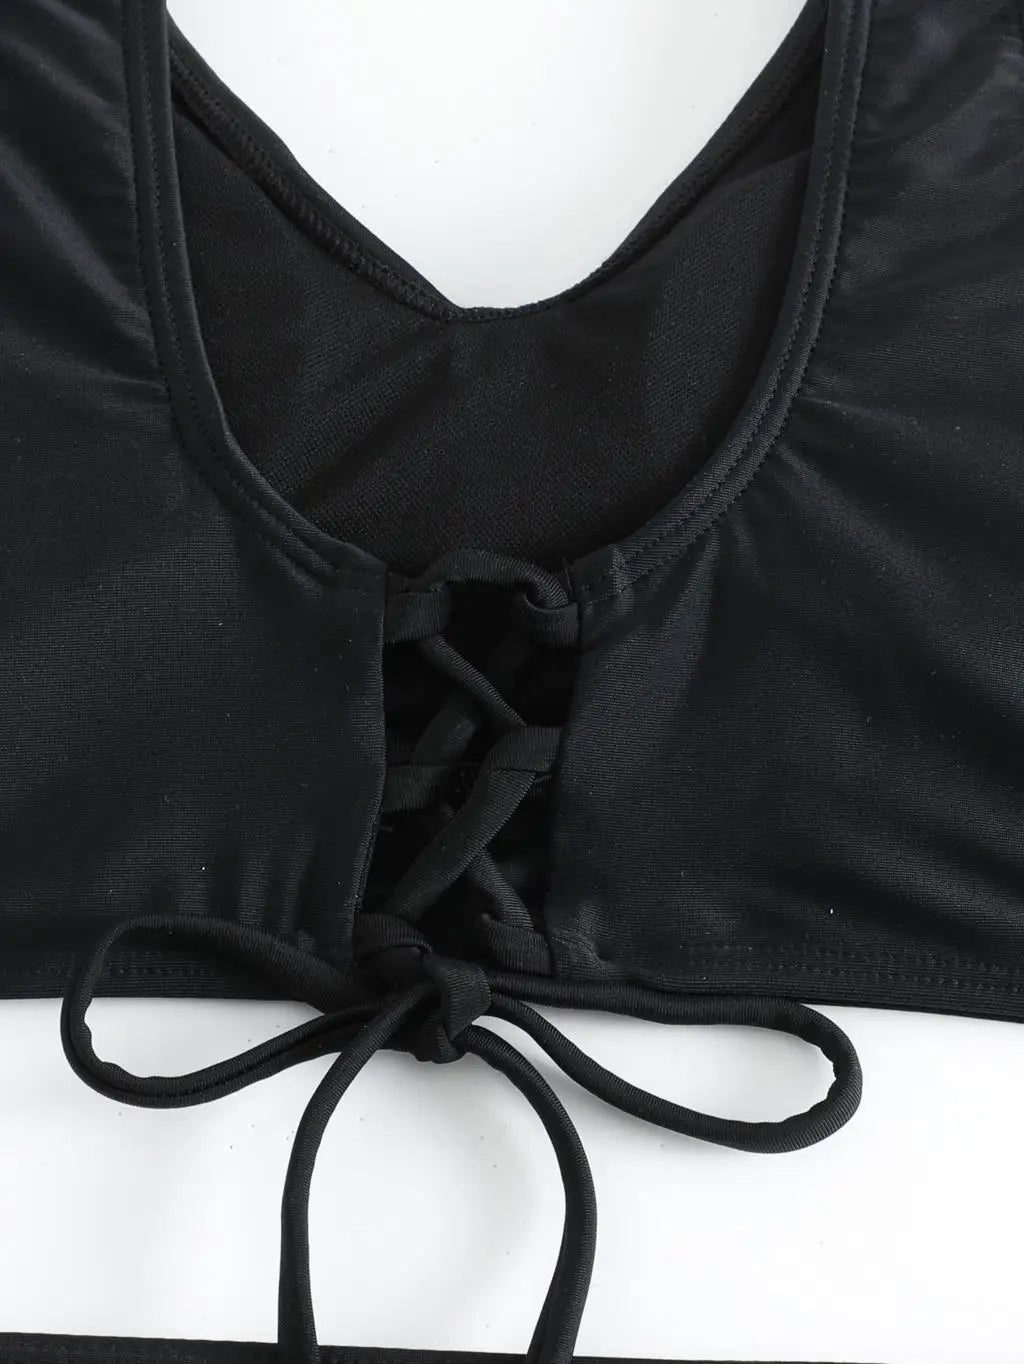 2024 Black Bikini Drawstring Swimsuit Women Sexy High Waist Swimwear Female Bathers Bathing Swimming Swim Suit Beachwear